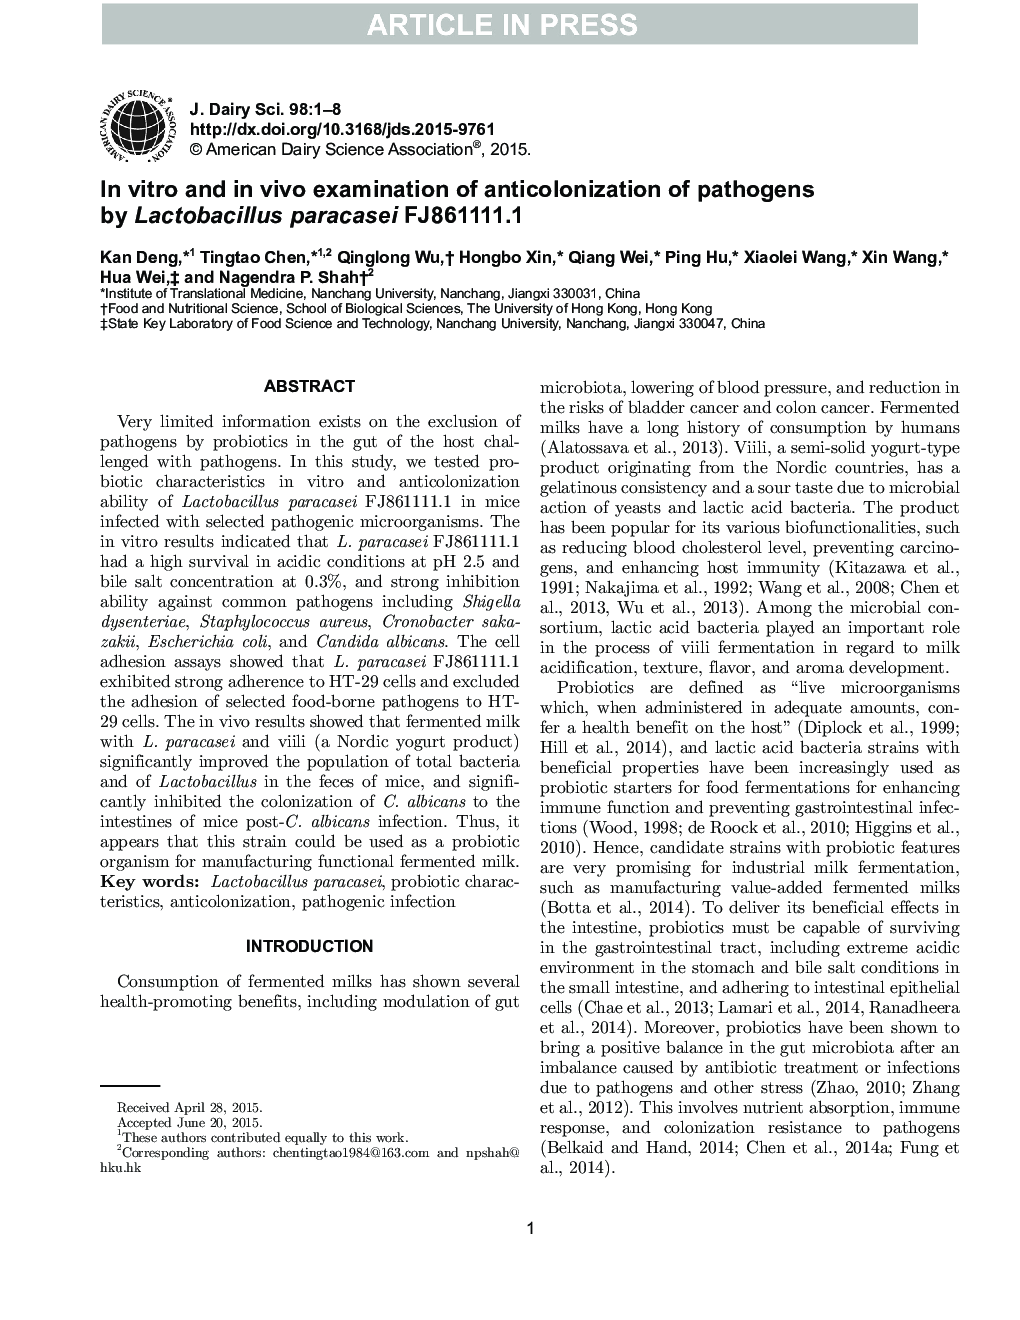 In vitro and in vivo examination of anticolonization of pathogens by Lactobacillus paracasei FJ861111.1